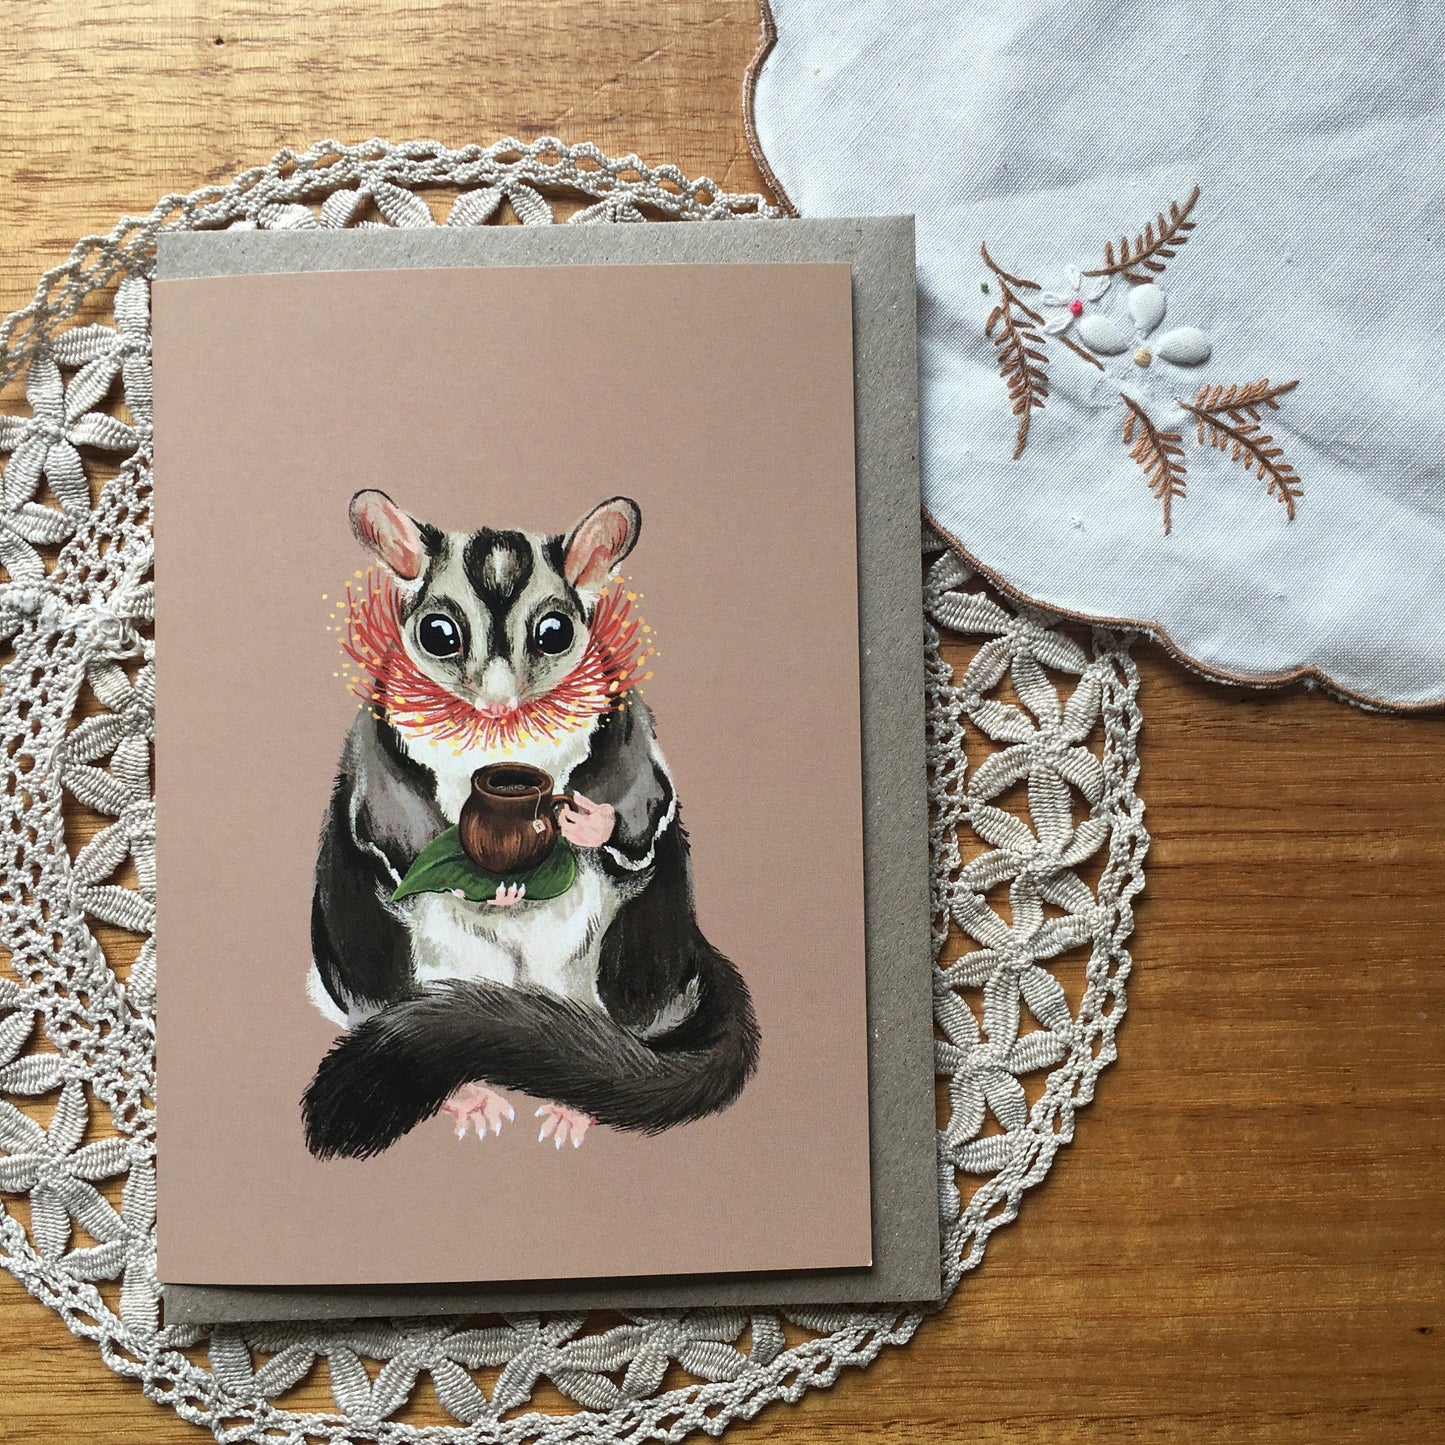 Anna Seed Art | Greeting Card - Sugar Glider Teatime. Lovely illustration